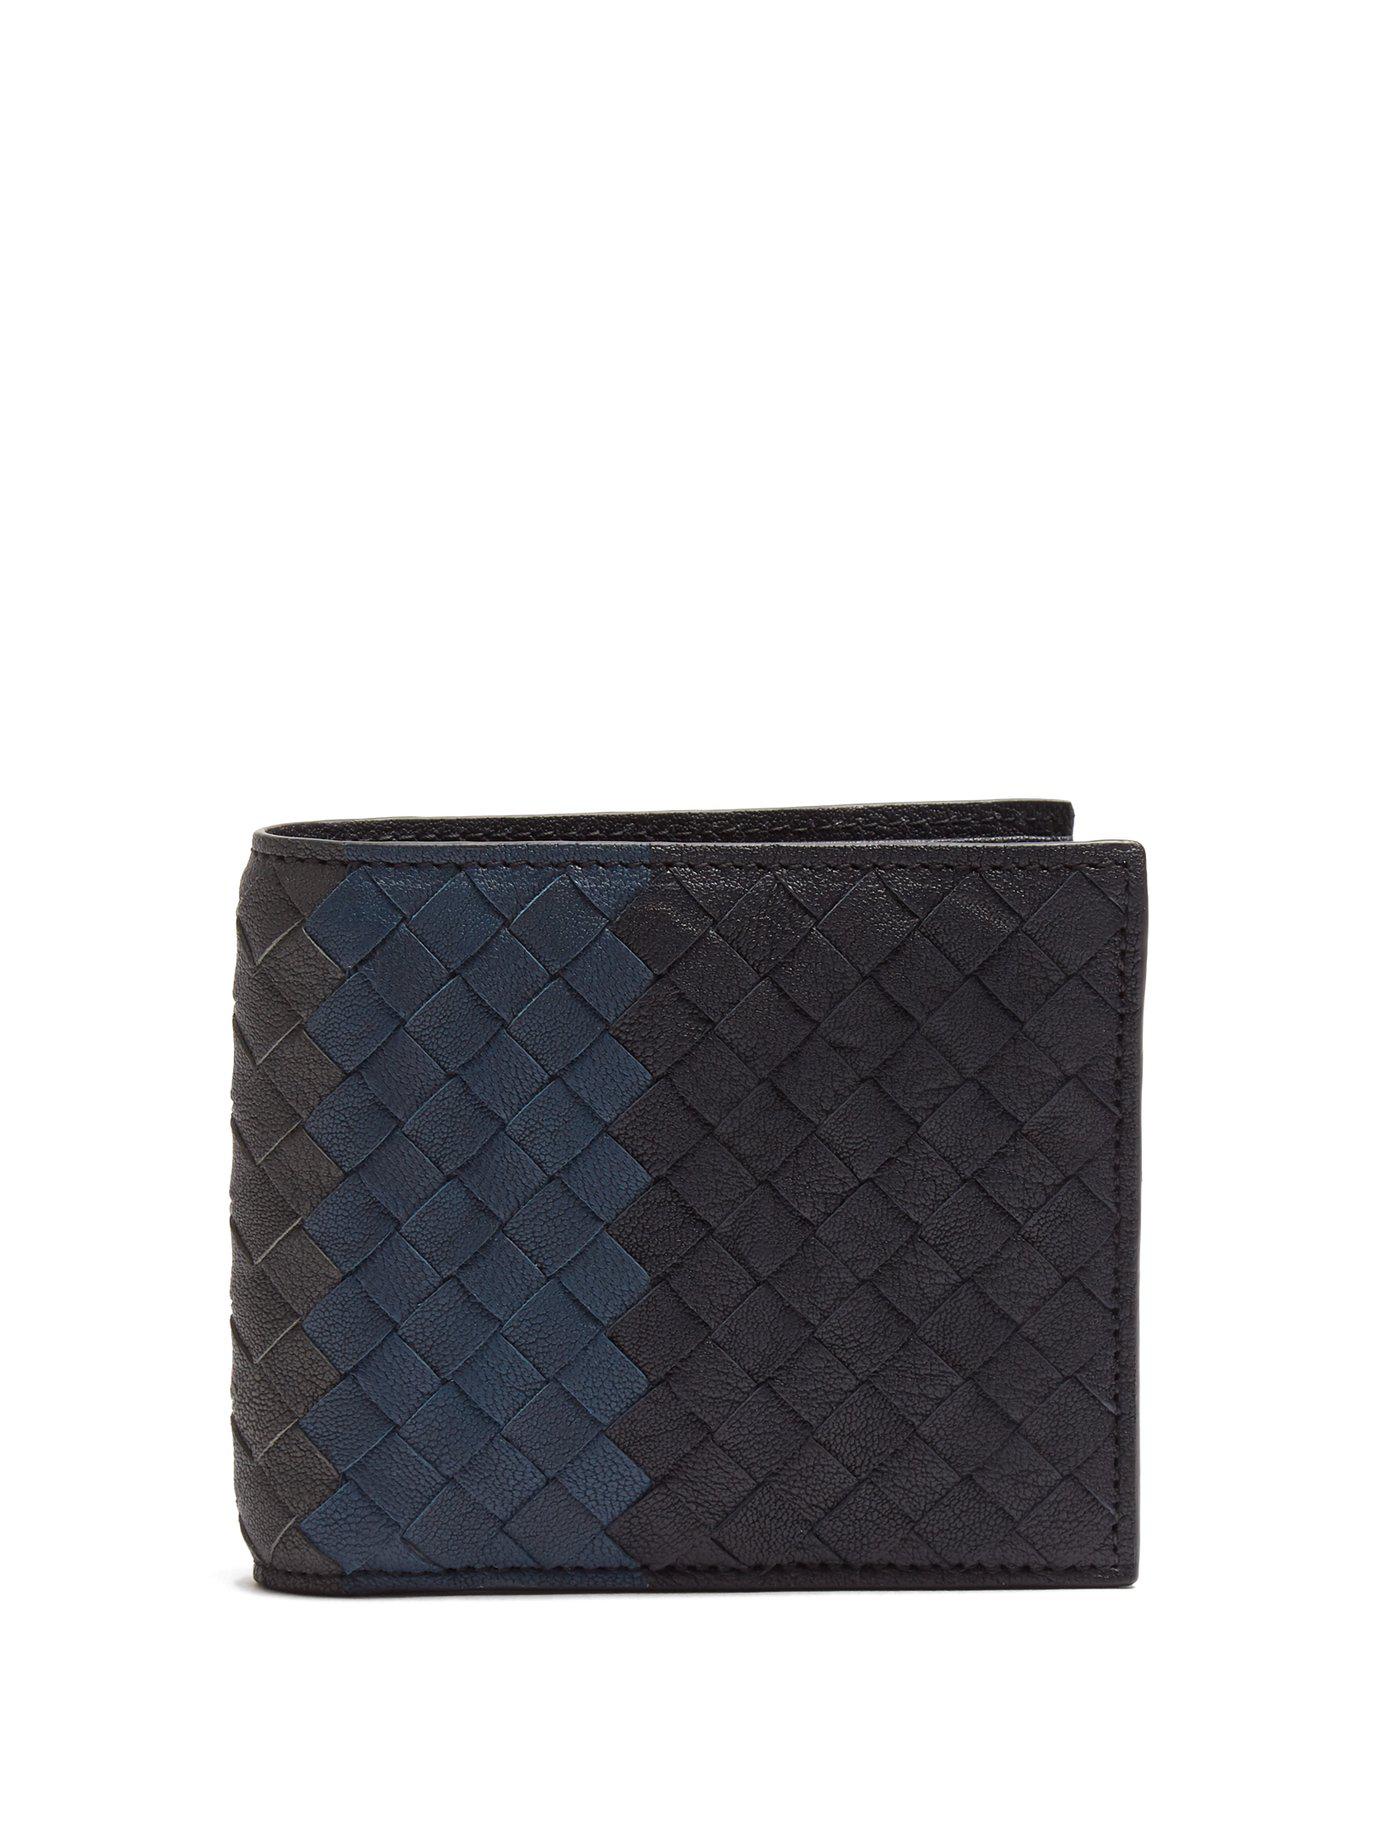 Bottega Veneta Tri-colour Bi-fold Intrecciato Leather Wallet in 